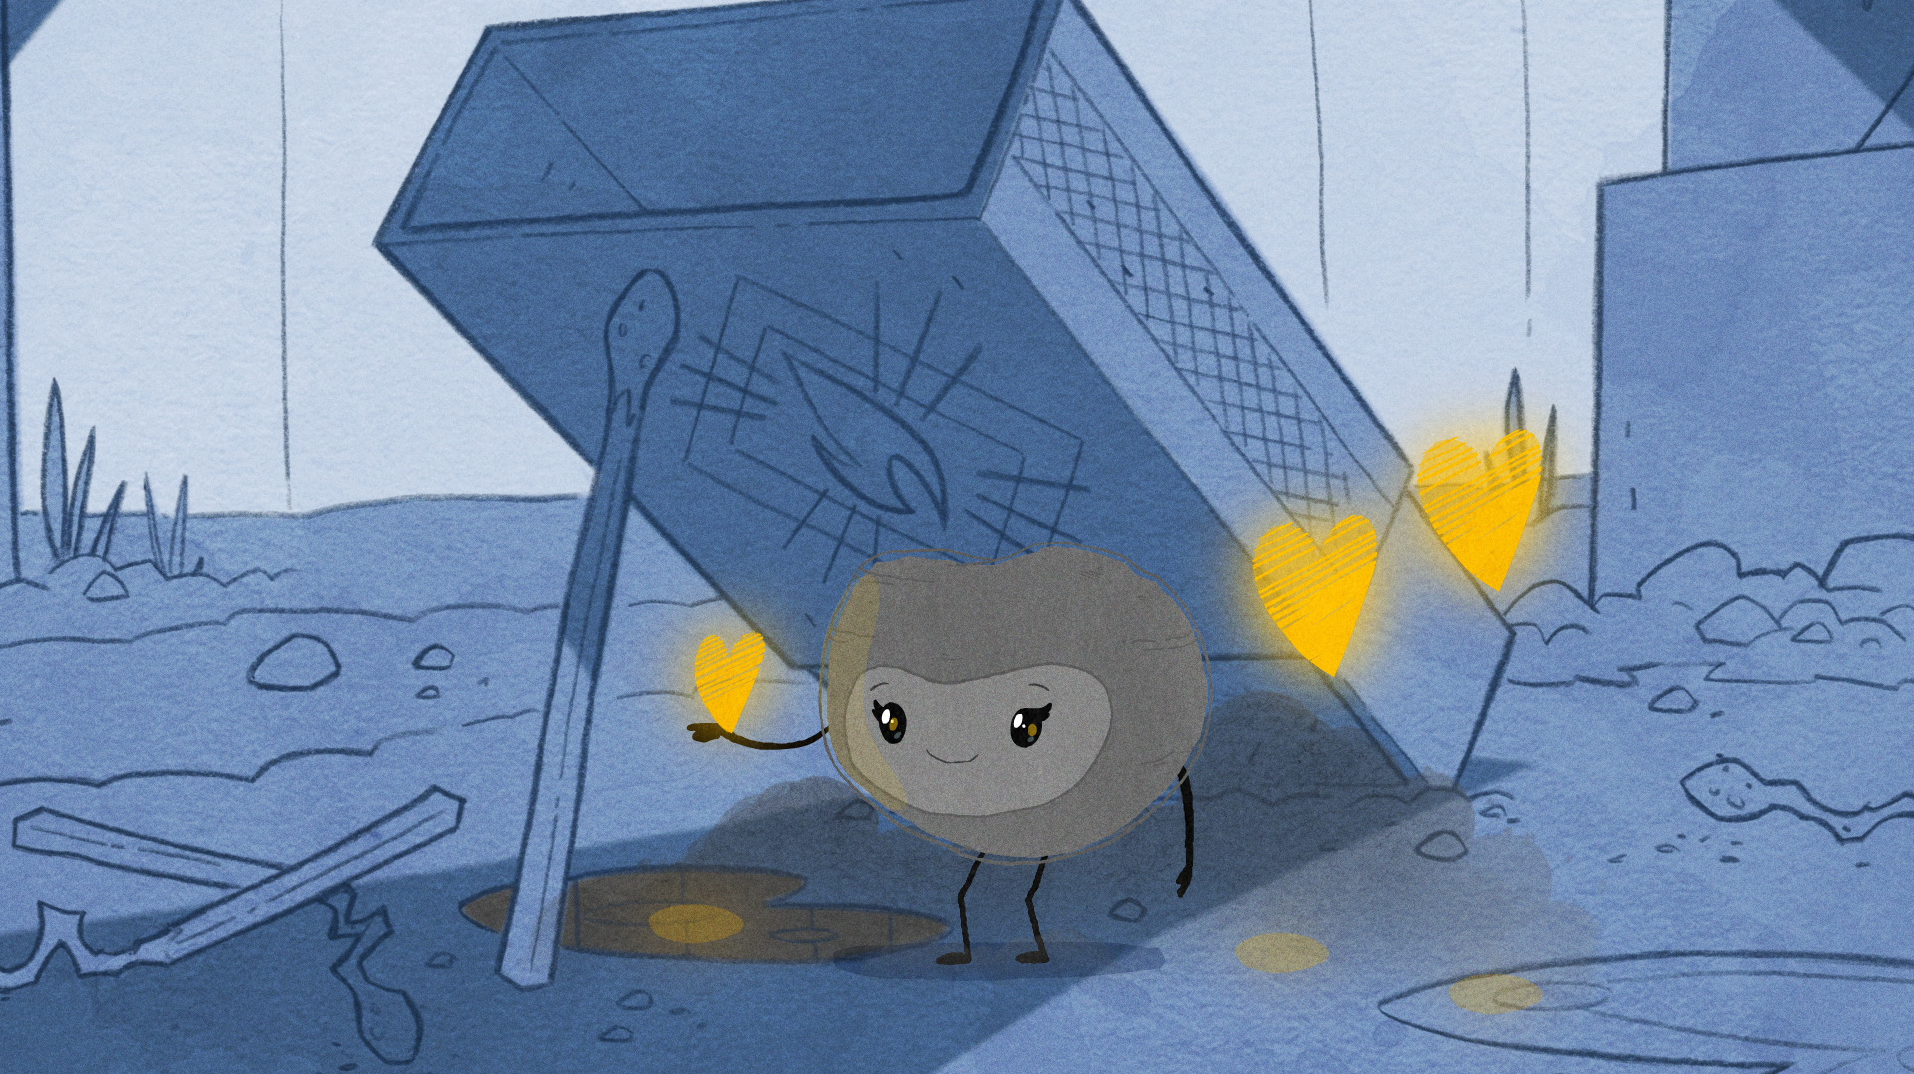 Shining Light on Homelessness through Animation